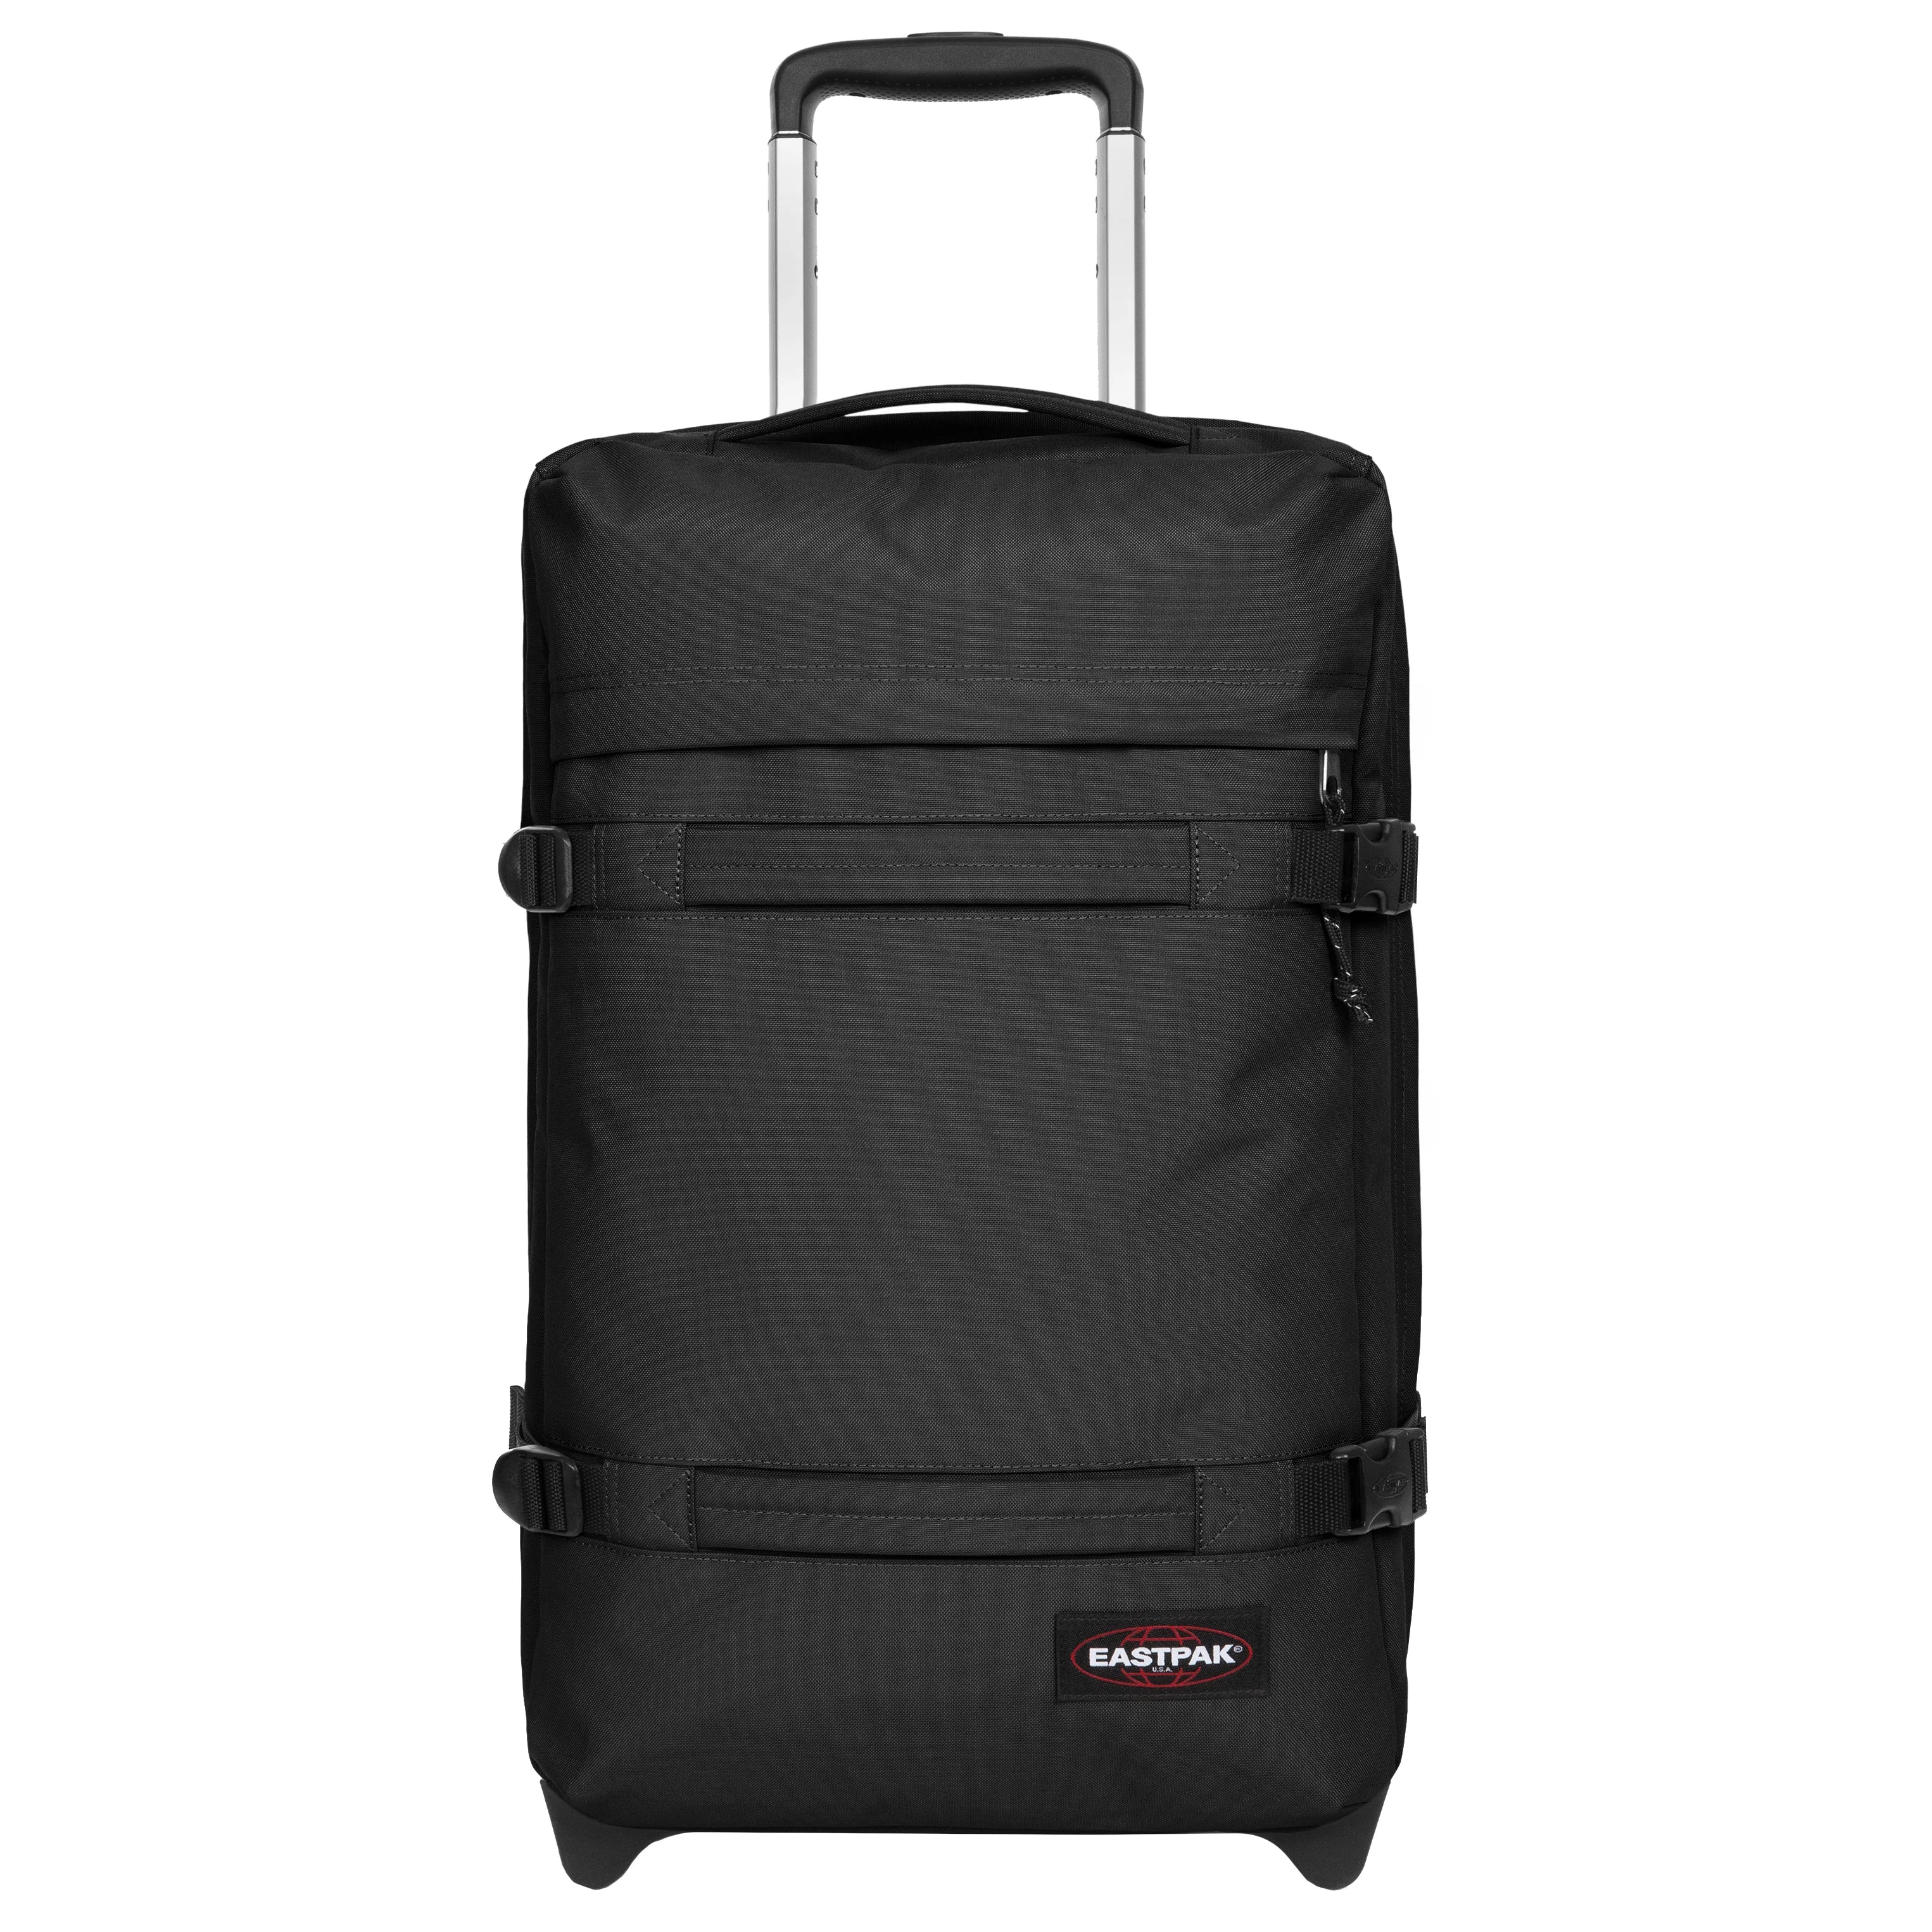 Eastpak Authentic Travel Transit'r S Rolling Travel Bag 51 cm - Black